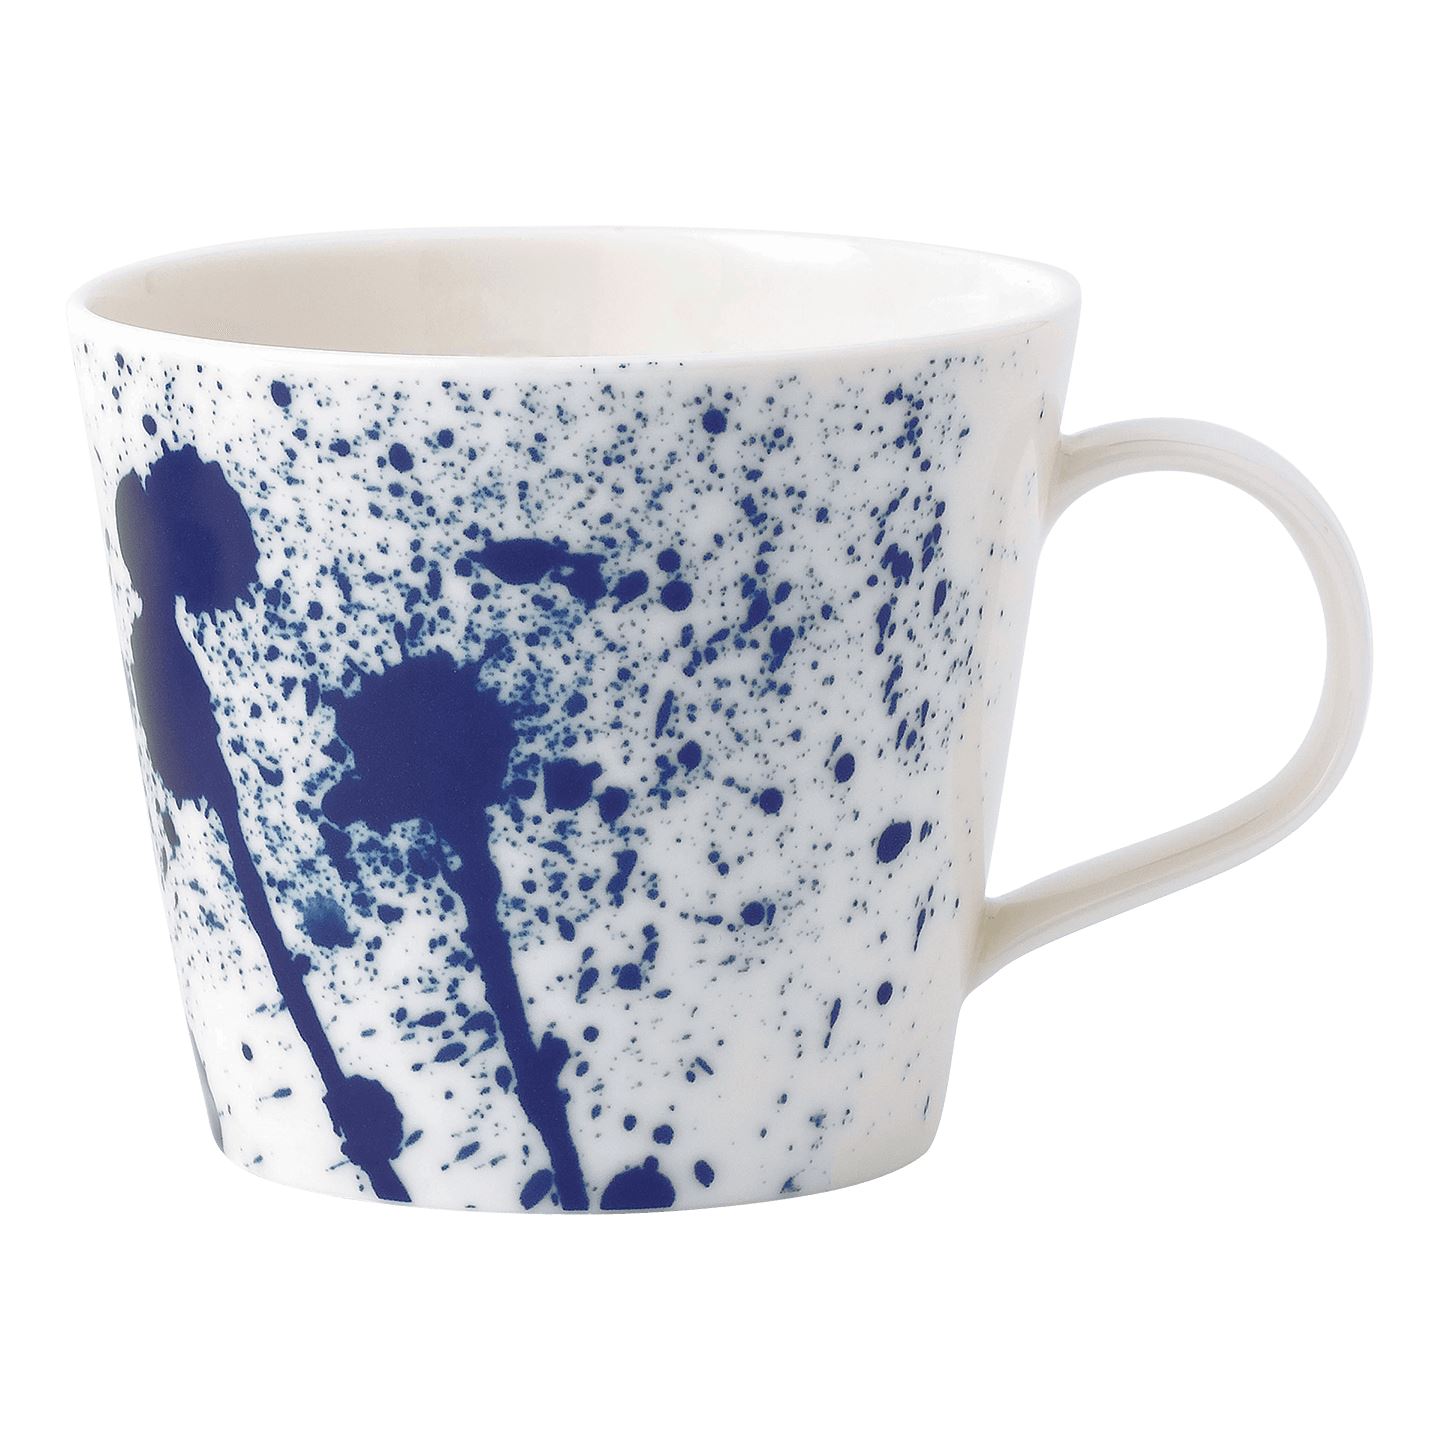 Details about   Royal Doulton PACIFIC Coffee Mug Cobalt Blue White Stripes 14 oz Porcelain New 